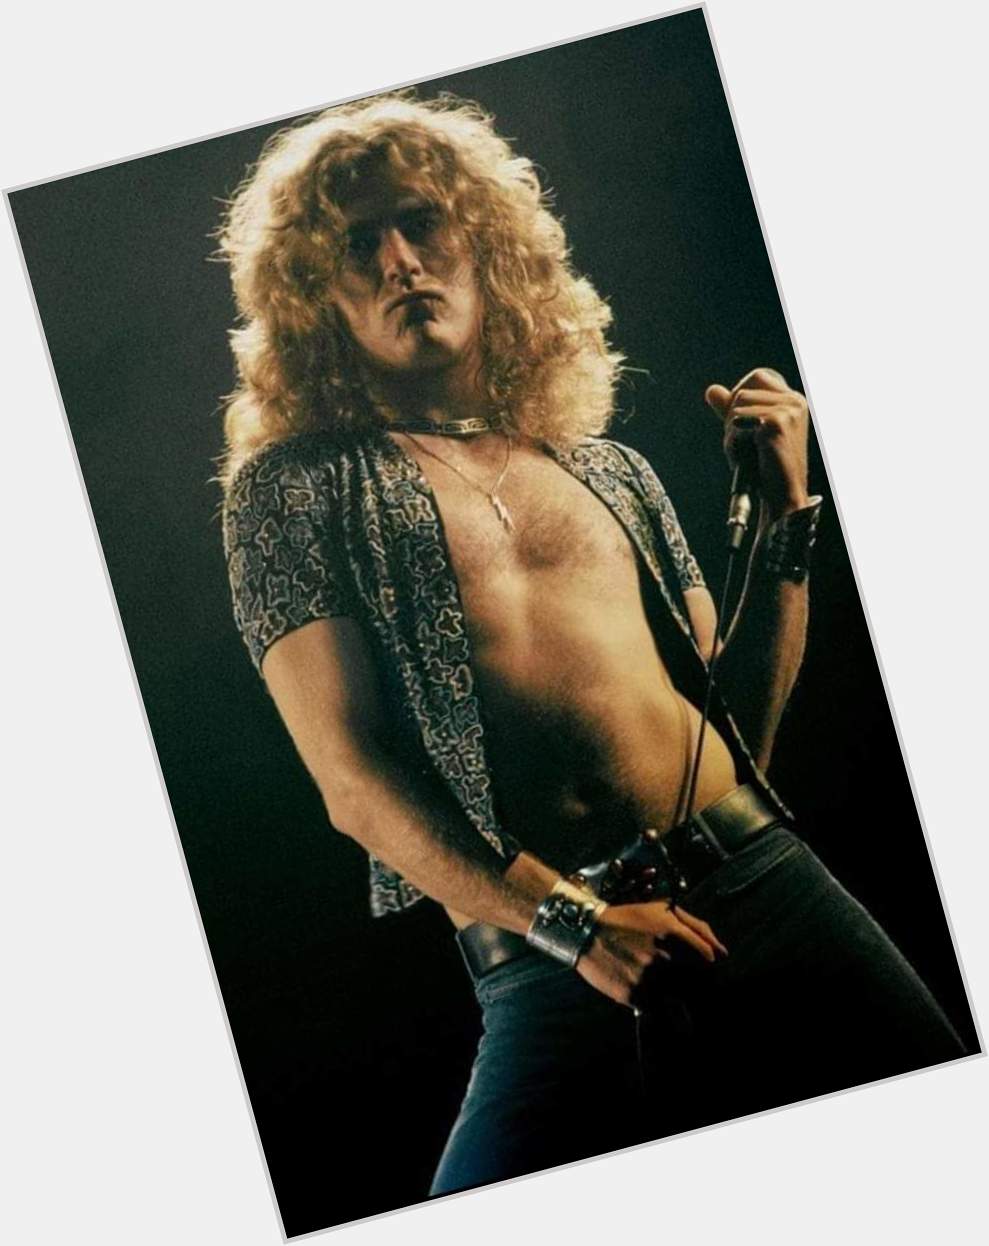 Happy birthday Robert Plant, he was born
August 20, 1948. 